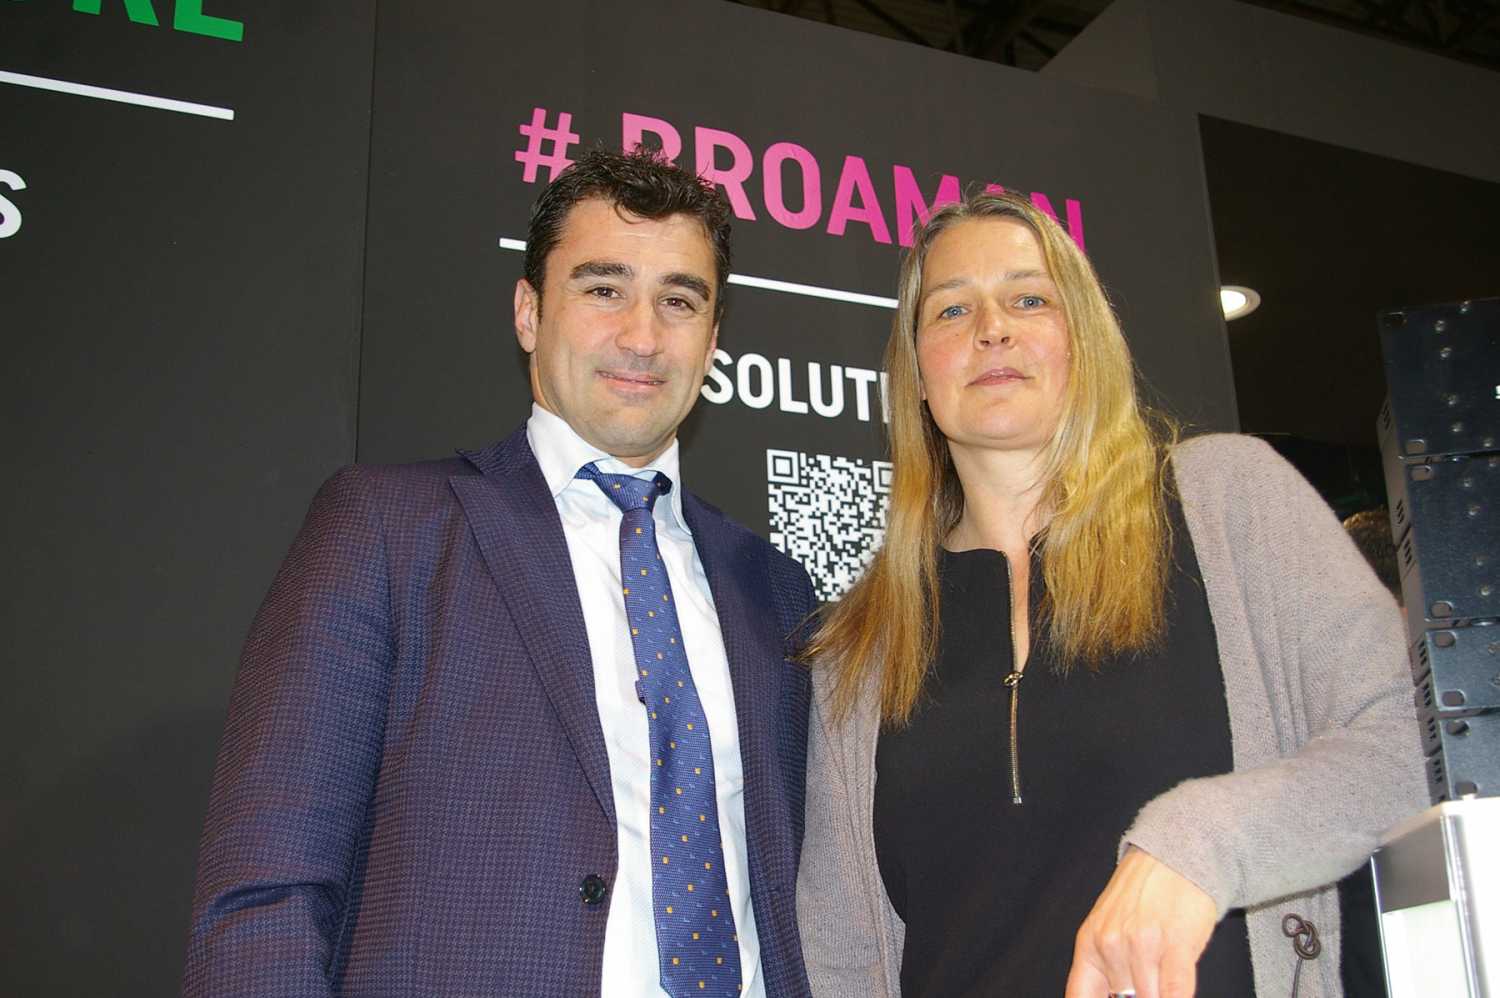 BroaMan MD Tine Helmle, with Luca Catalano, CEO, Communication Video Engineering (CVE)